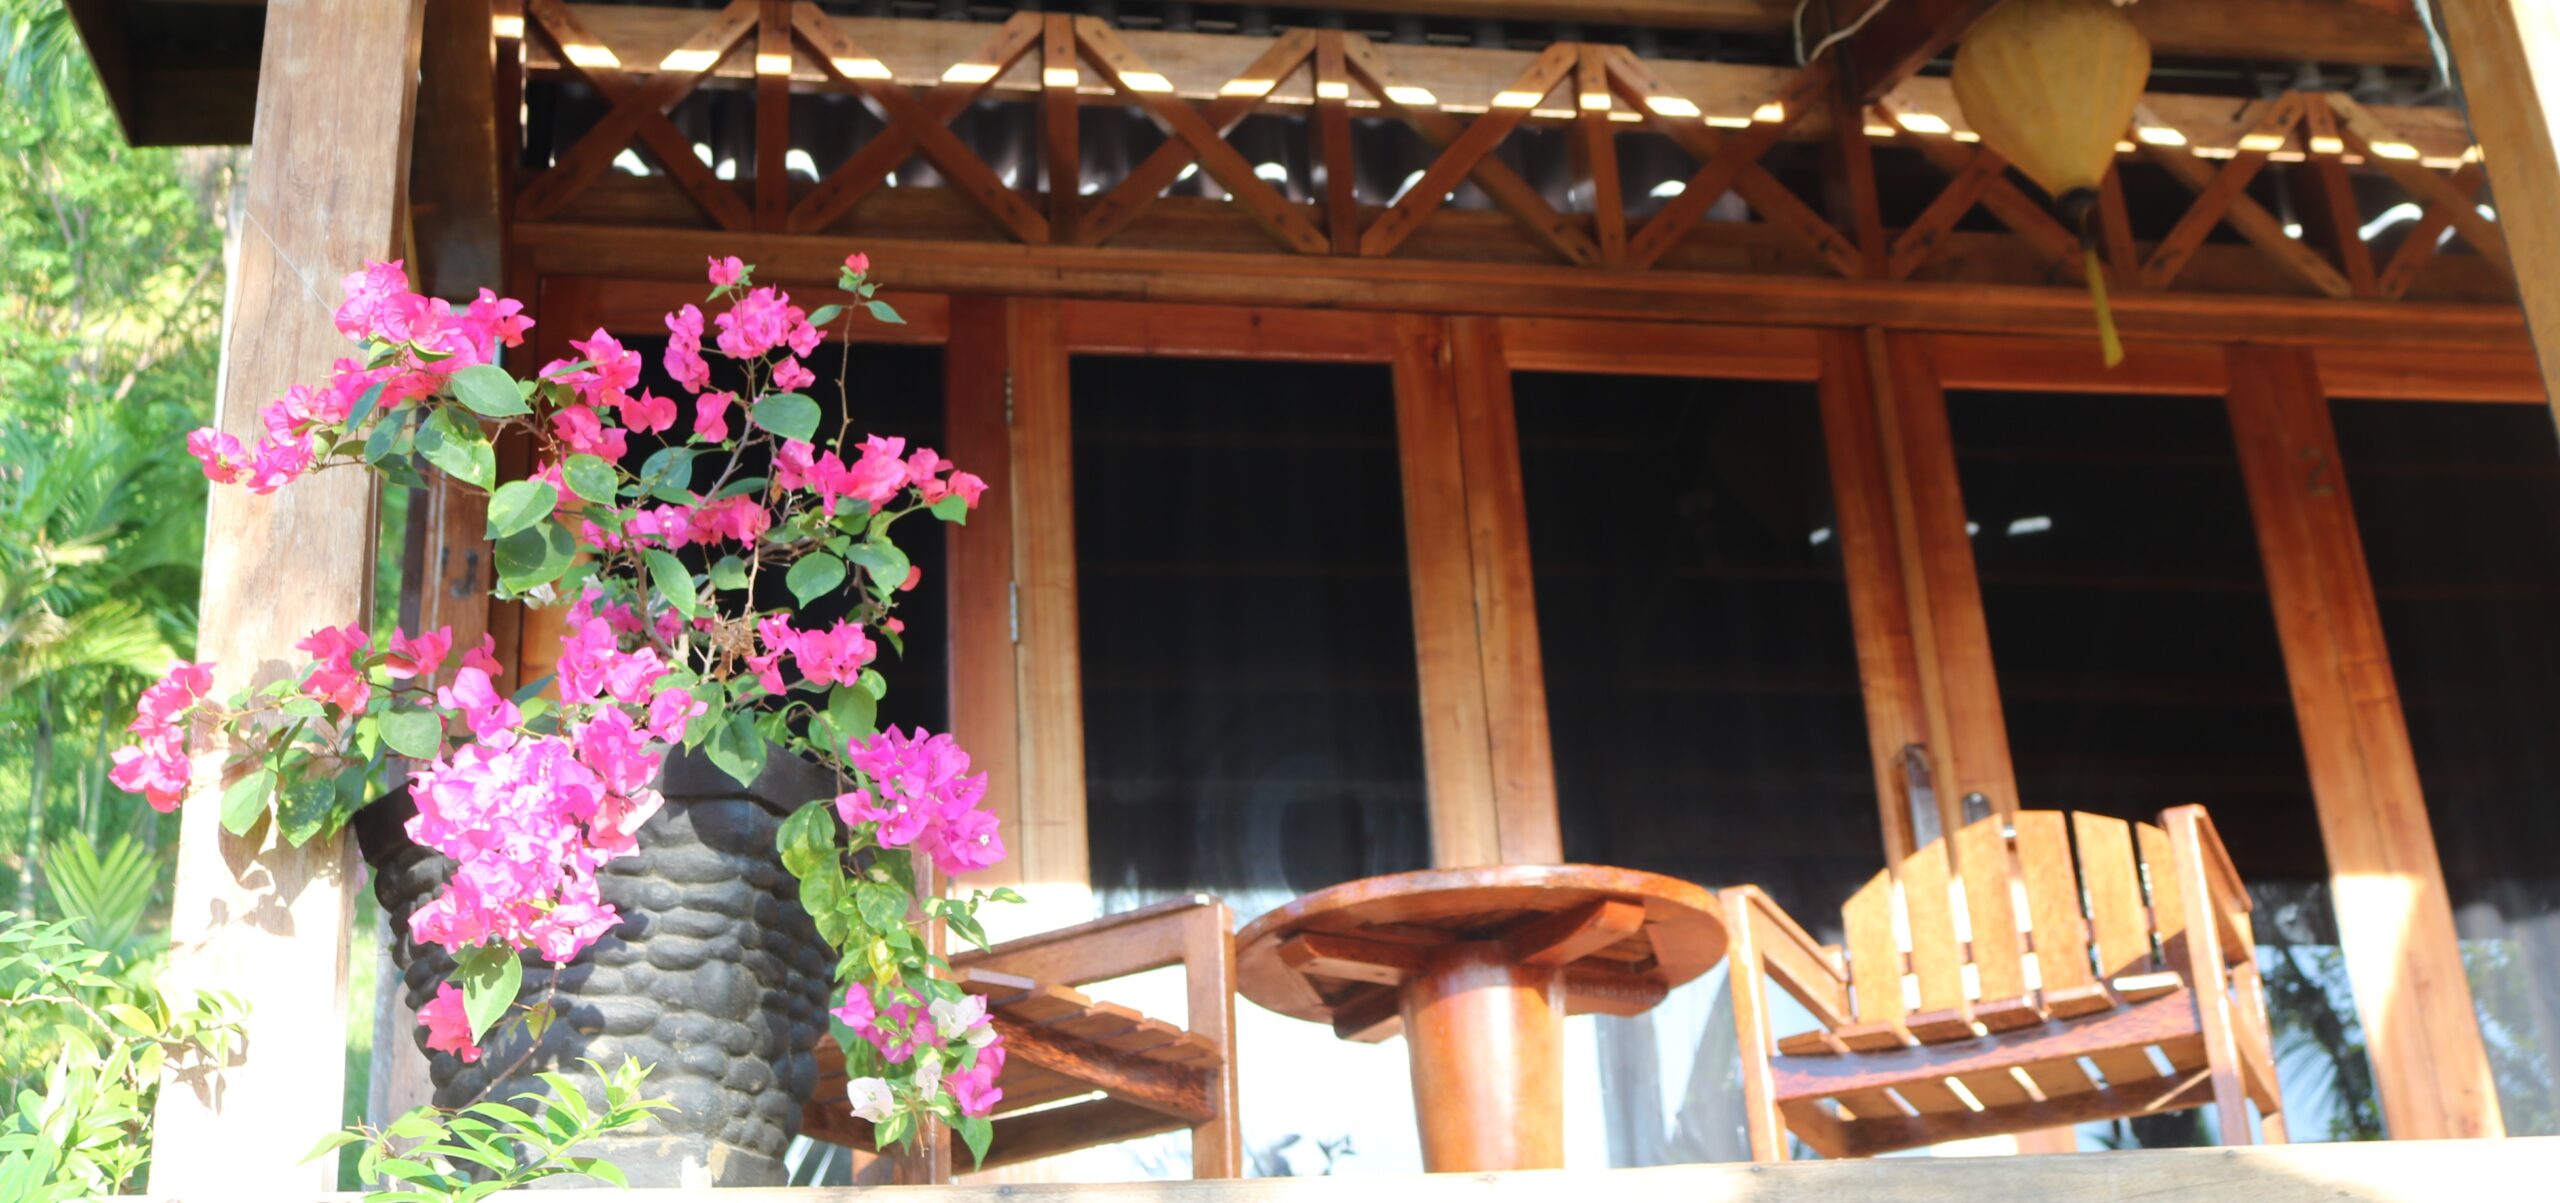 the wooden double storey main house terrace at airmanis hillside retreat padang west sumatra